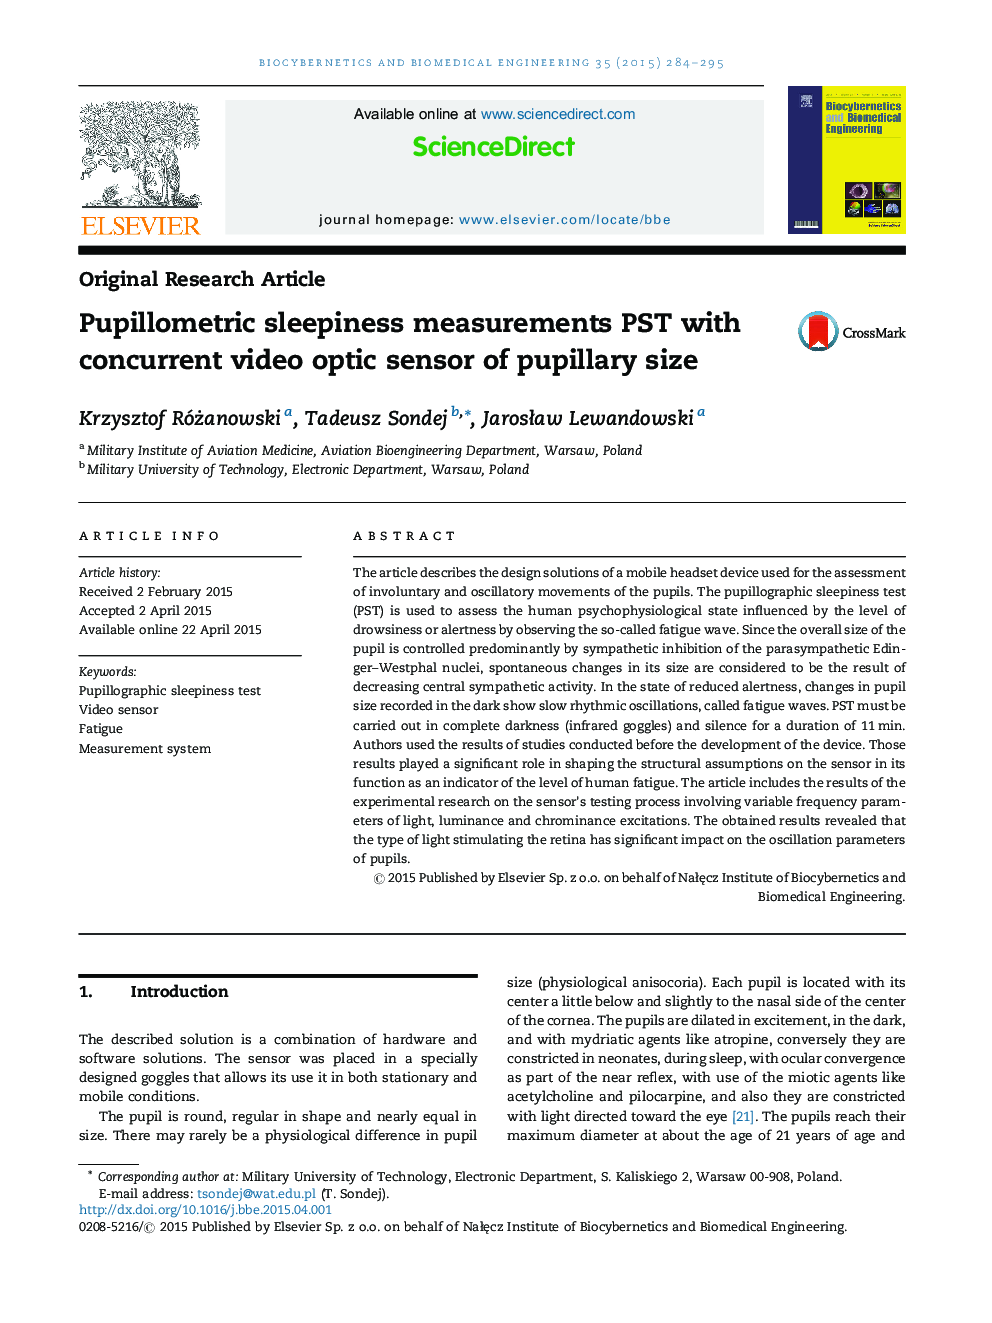 Pupillometric sleepiness measurements PST with concurrent video optic sensor of pupillary size